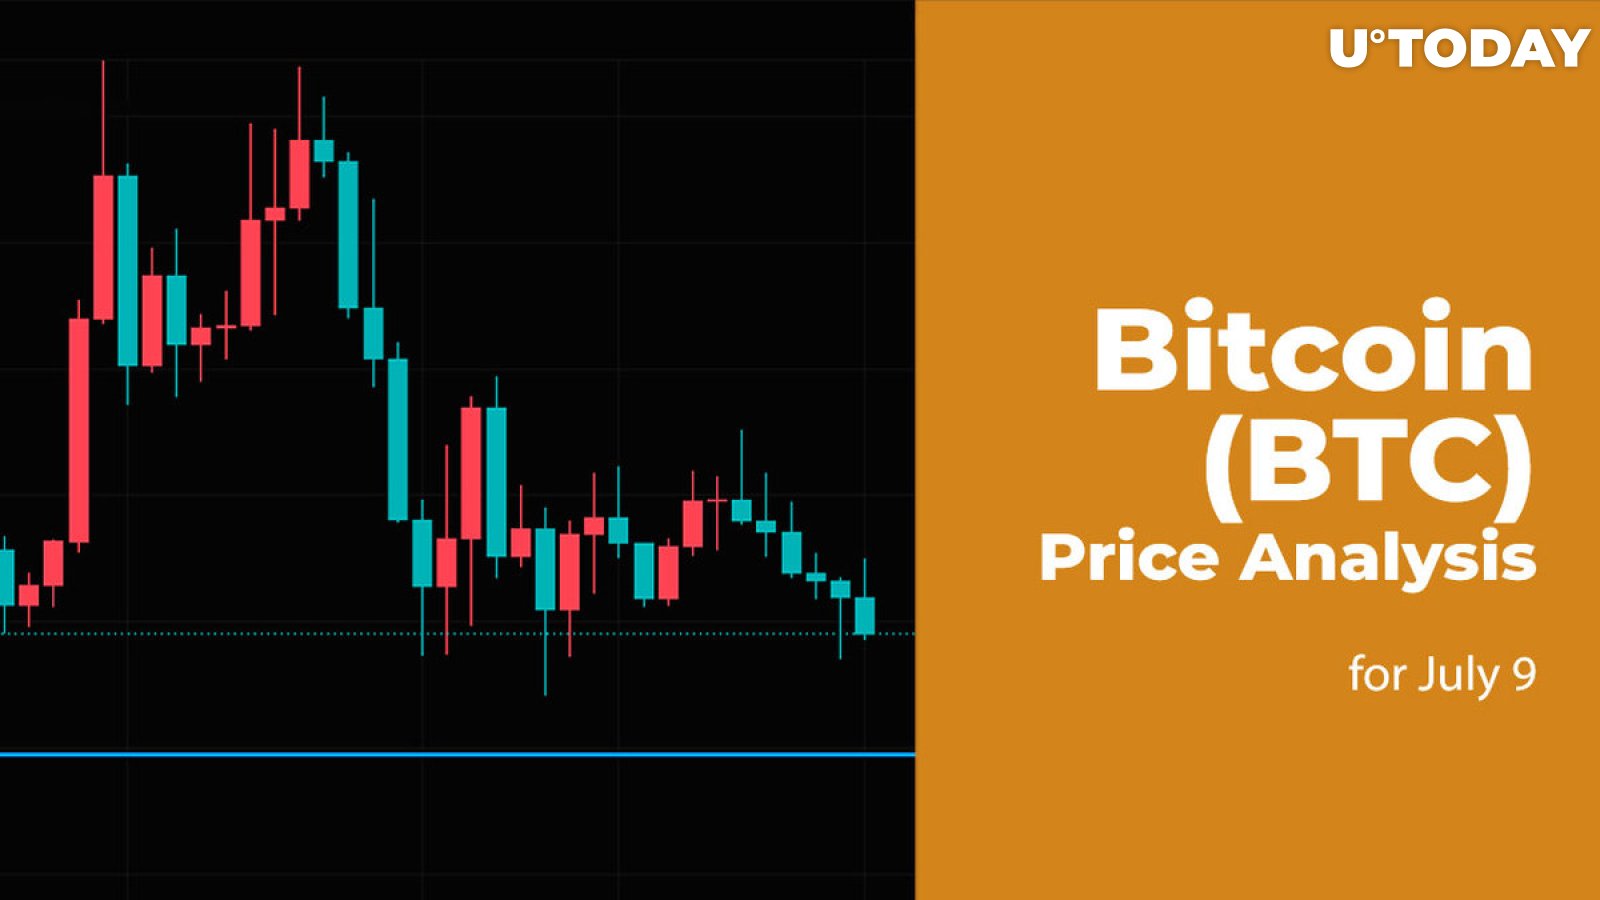 Bitcoin (BTC) Price Analysis for July 9